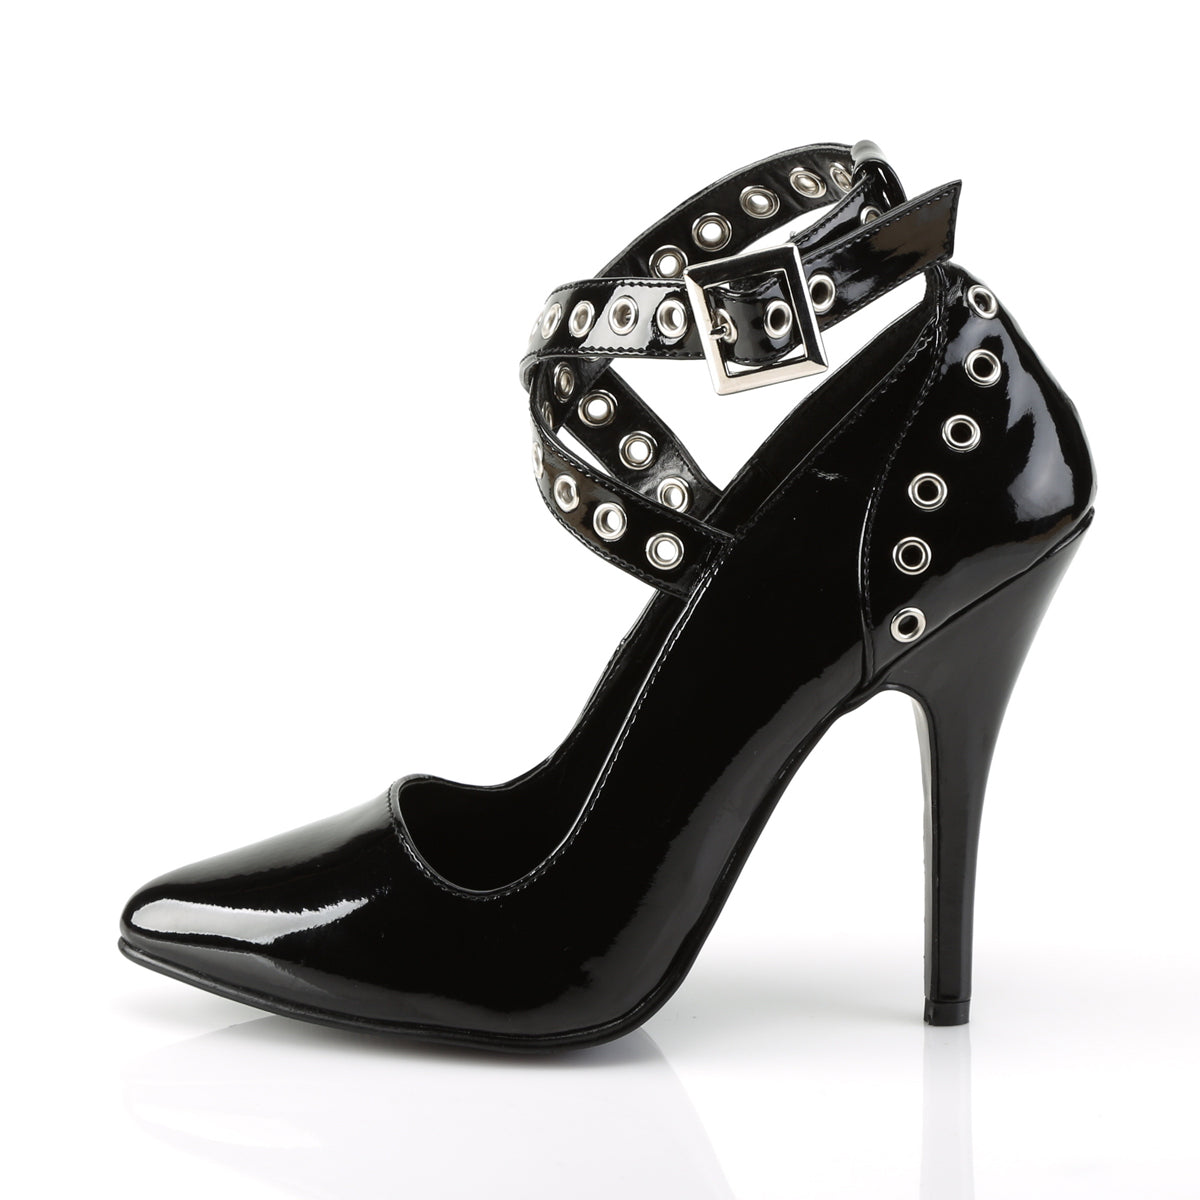 SEDUCE-443 Sexy Shoes 5" Heel Black Patent Fetish Footwear-Pleaser- Sexy Shoes Pole Dance Heels